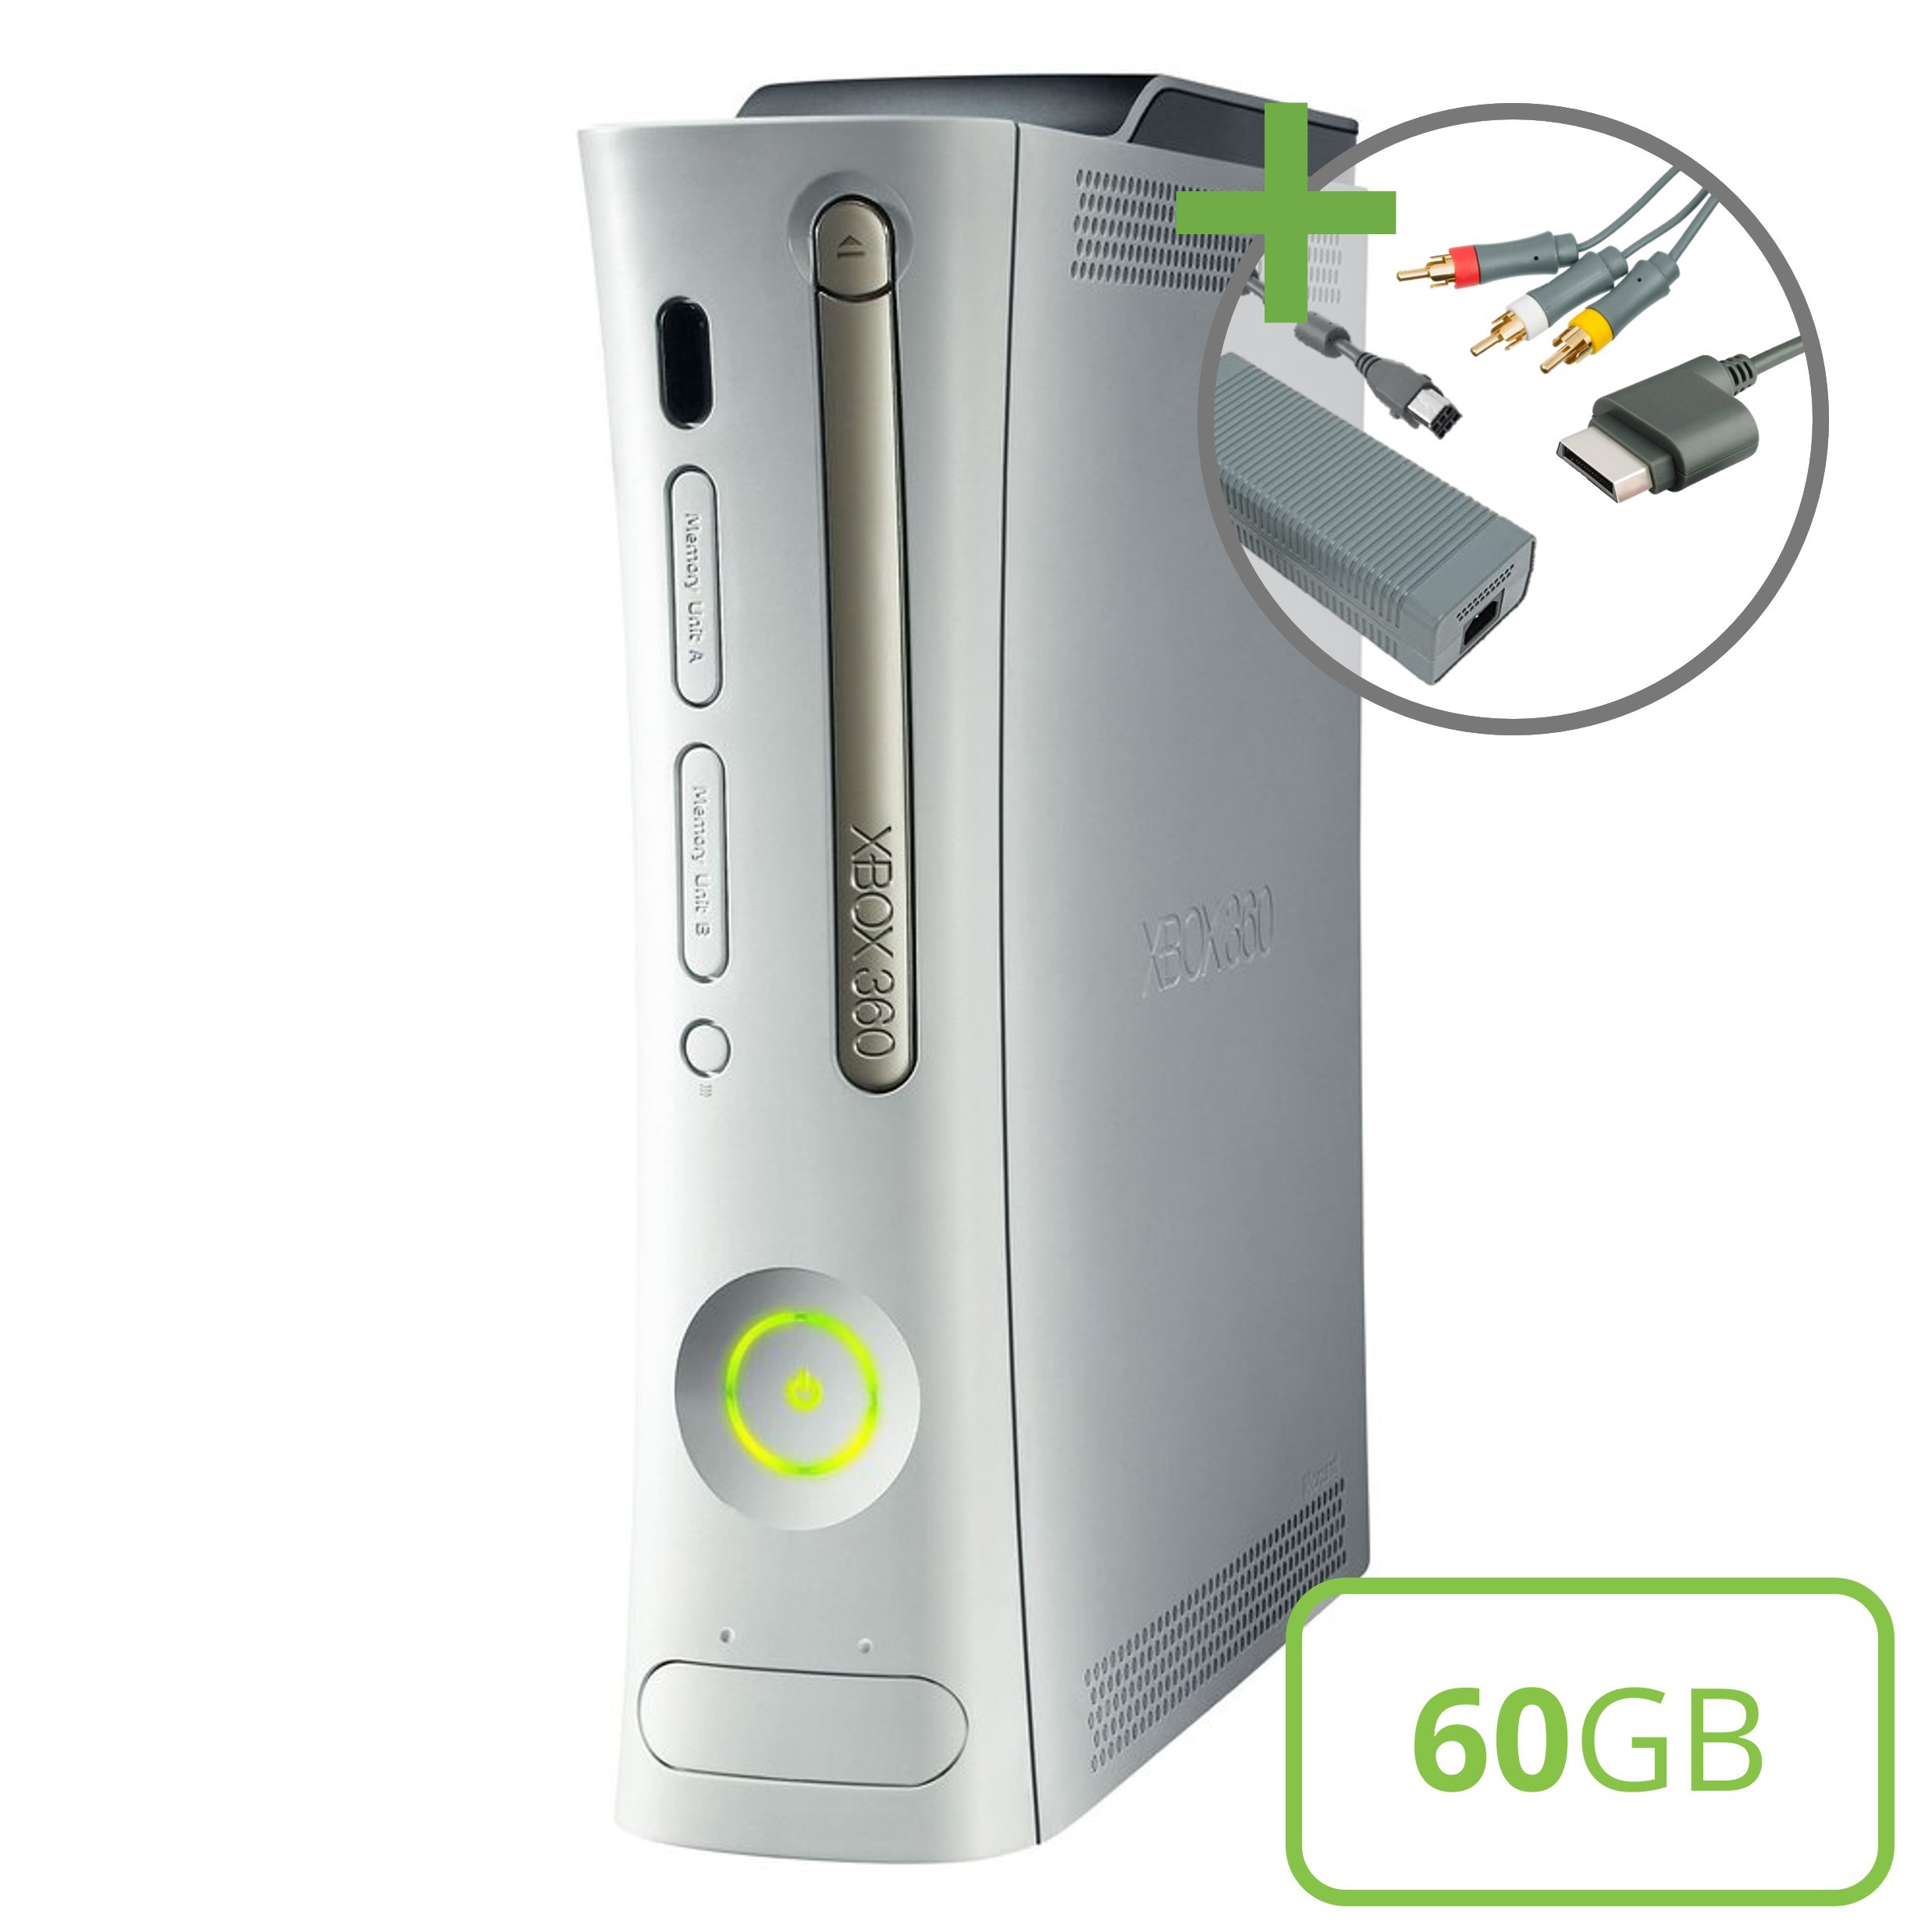 Microsoft Xbox 360 Premium Console (AV) - 60GB - Xbox 360 Hardware